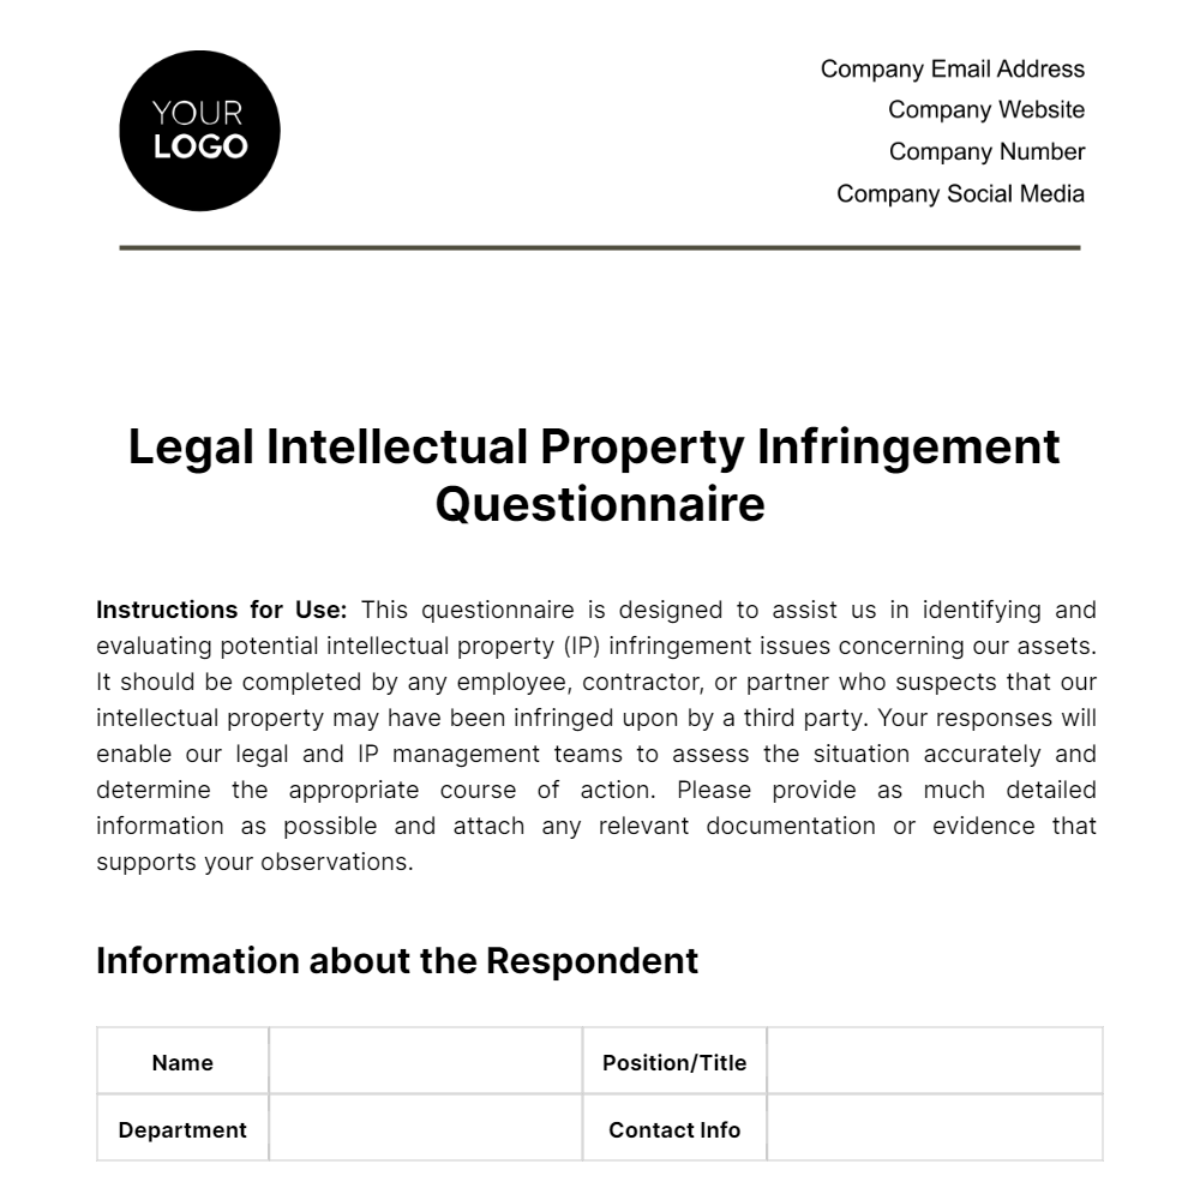 Free Legal Intellectual Property Infringement Questionnaire Template